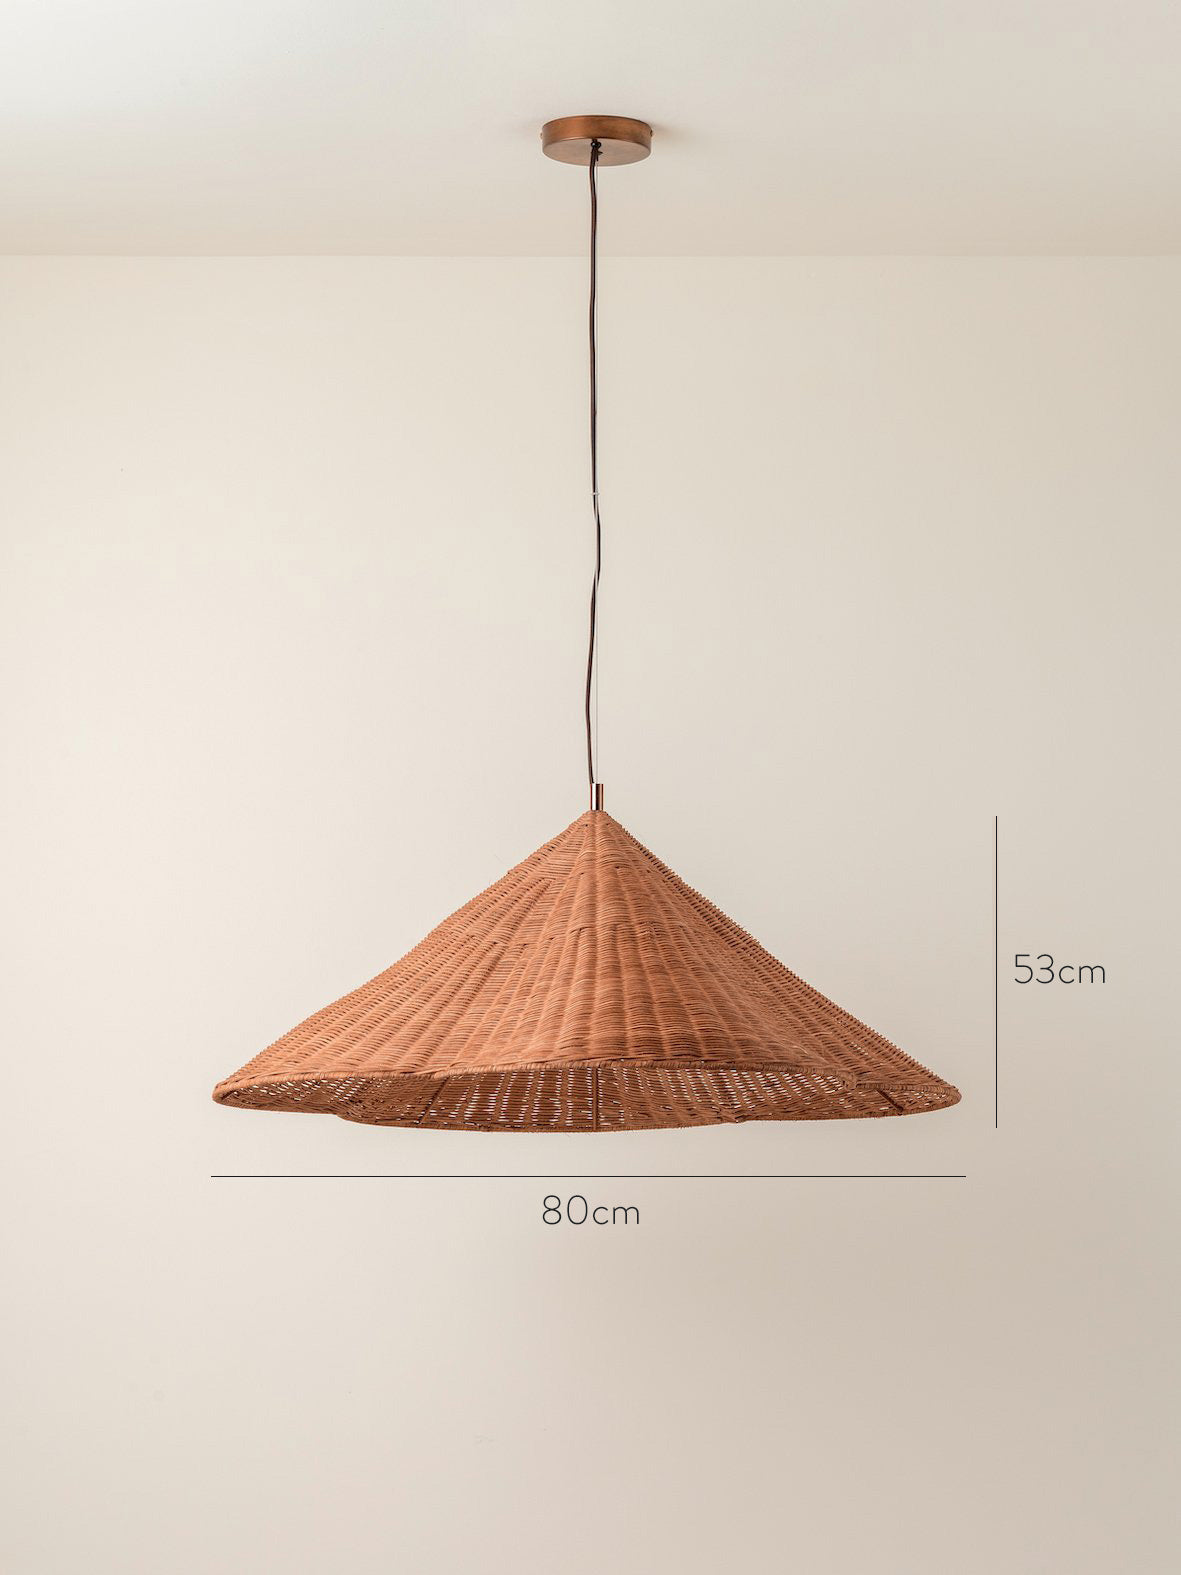 Bardi - 1 light oversized scalloped rattan pendant | Ceiling Light | Lights & Lamps Inc | USA